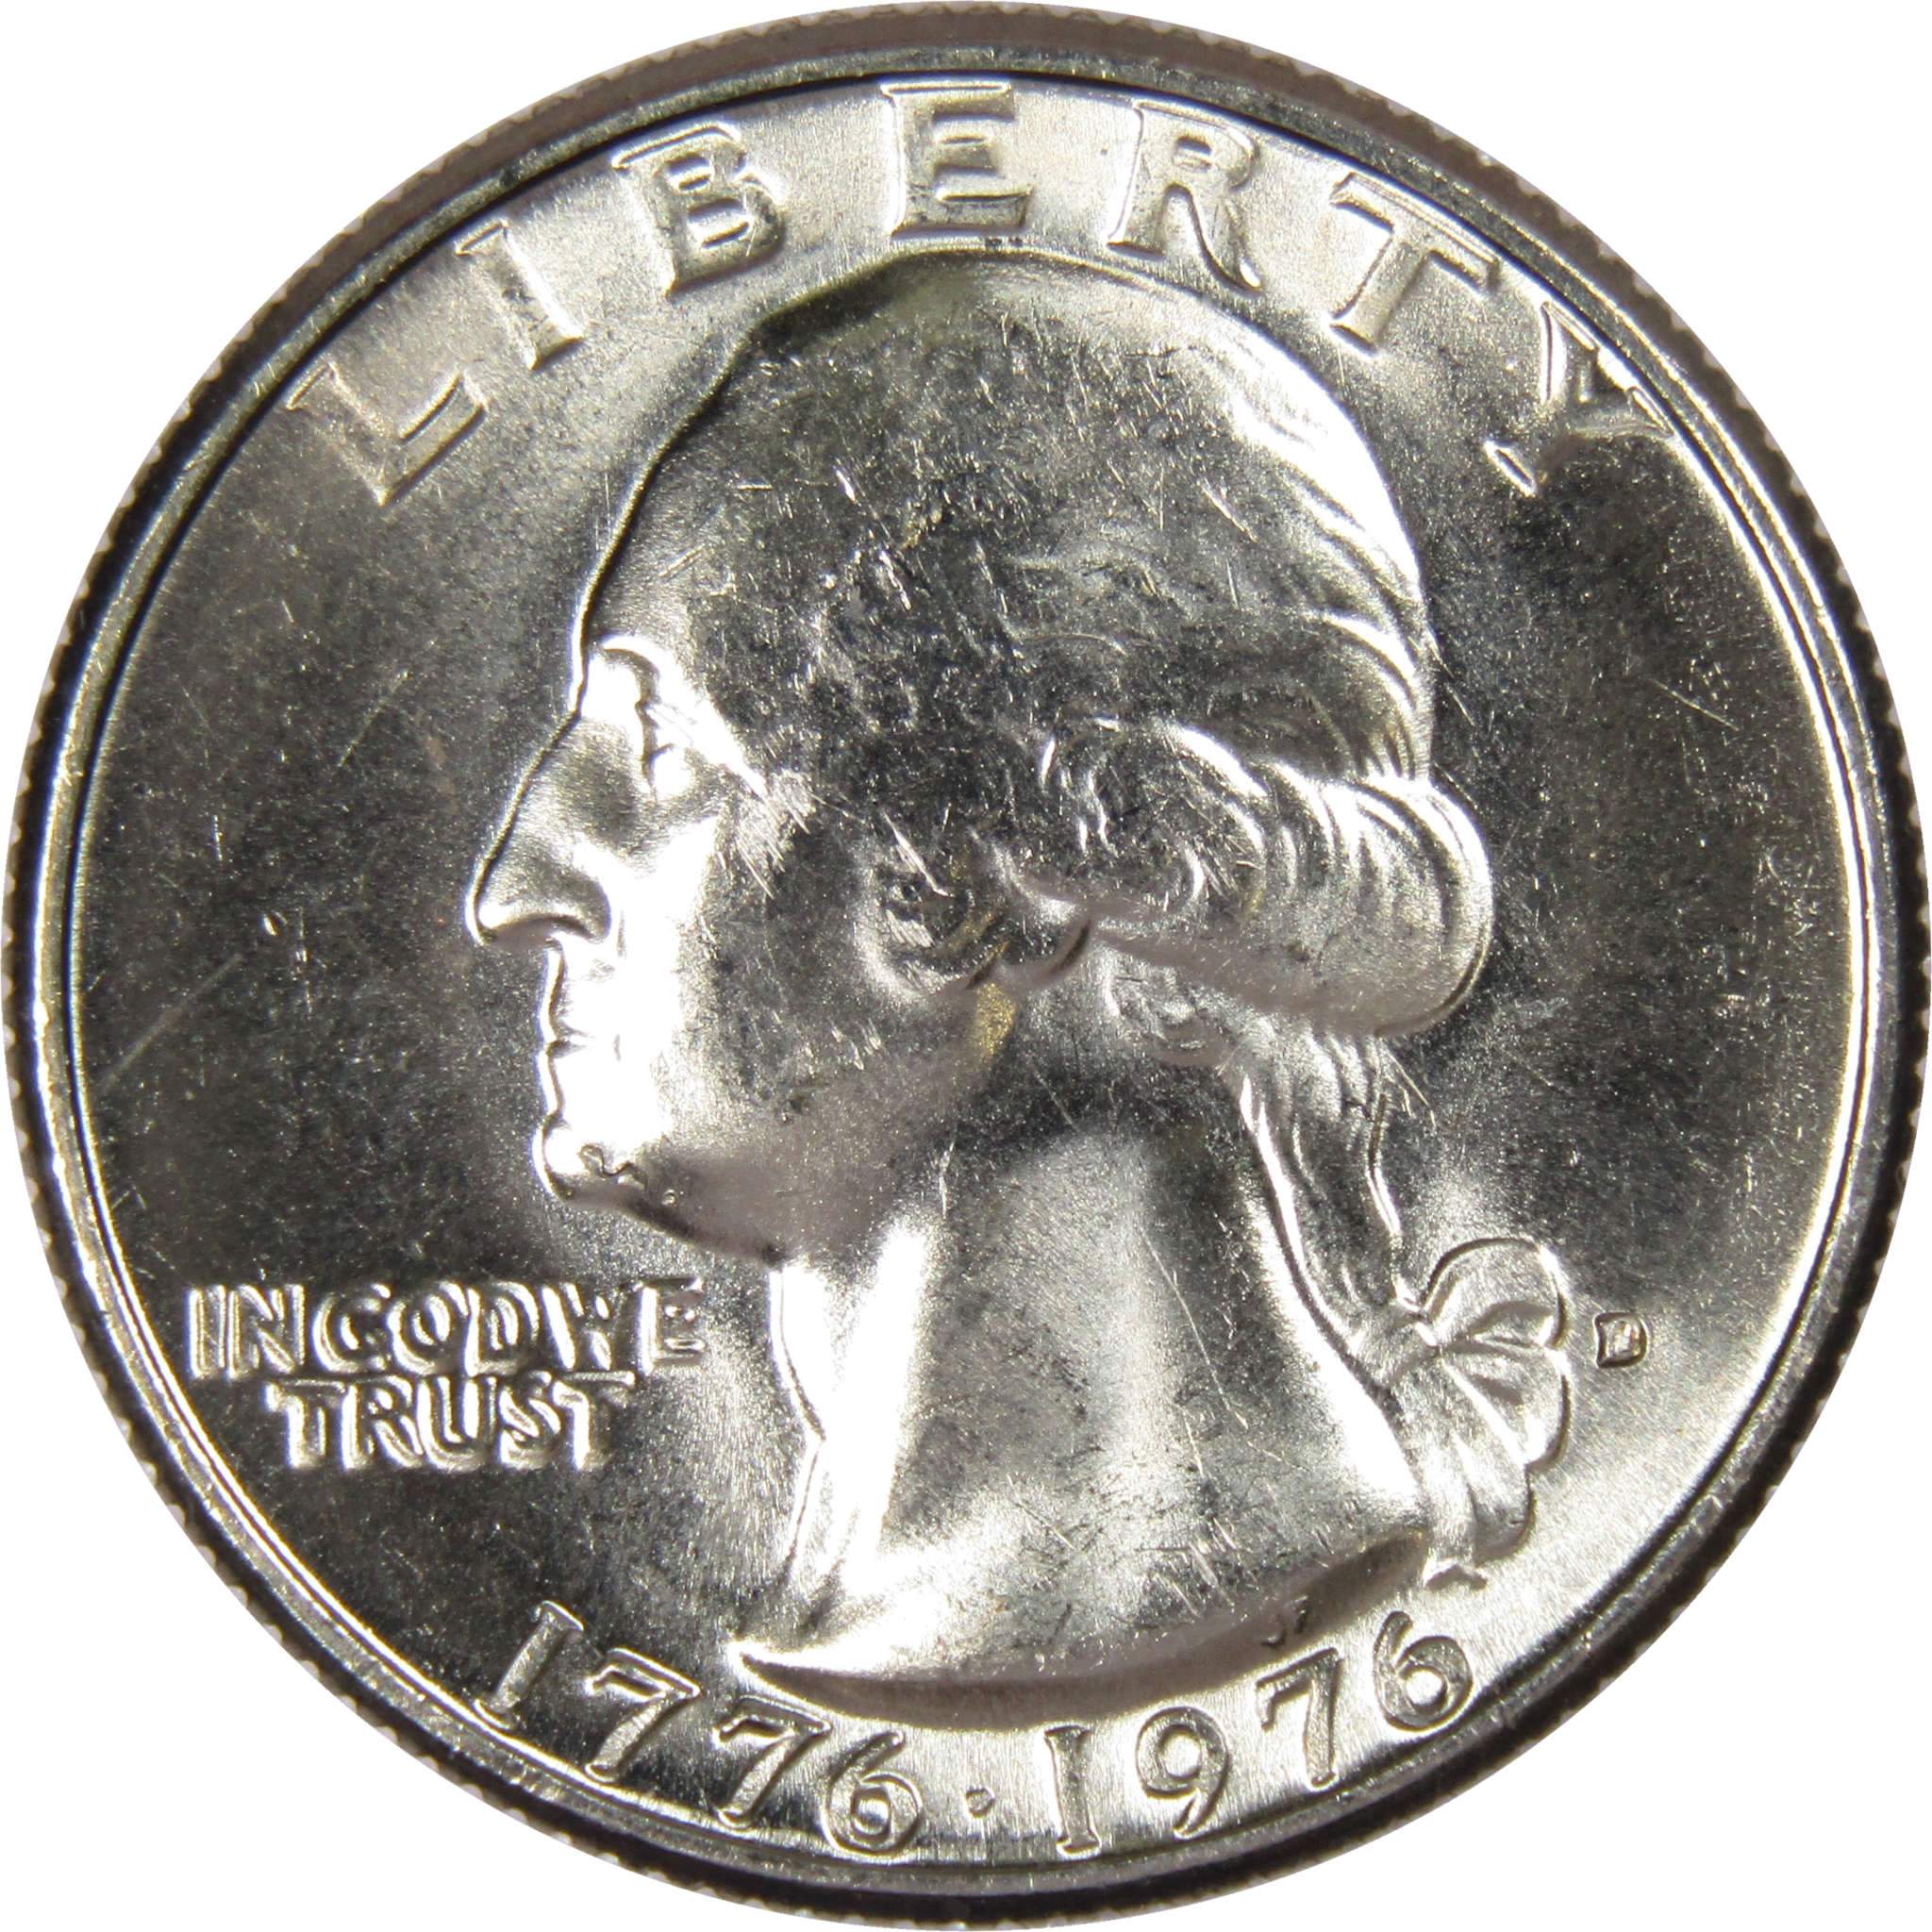 1976 D Washington Bicentennial Quarter BU Uncirculated Mint State 25c US Coin